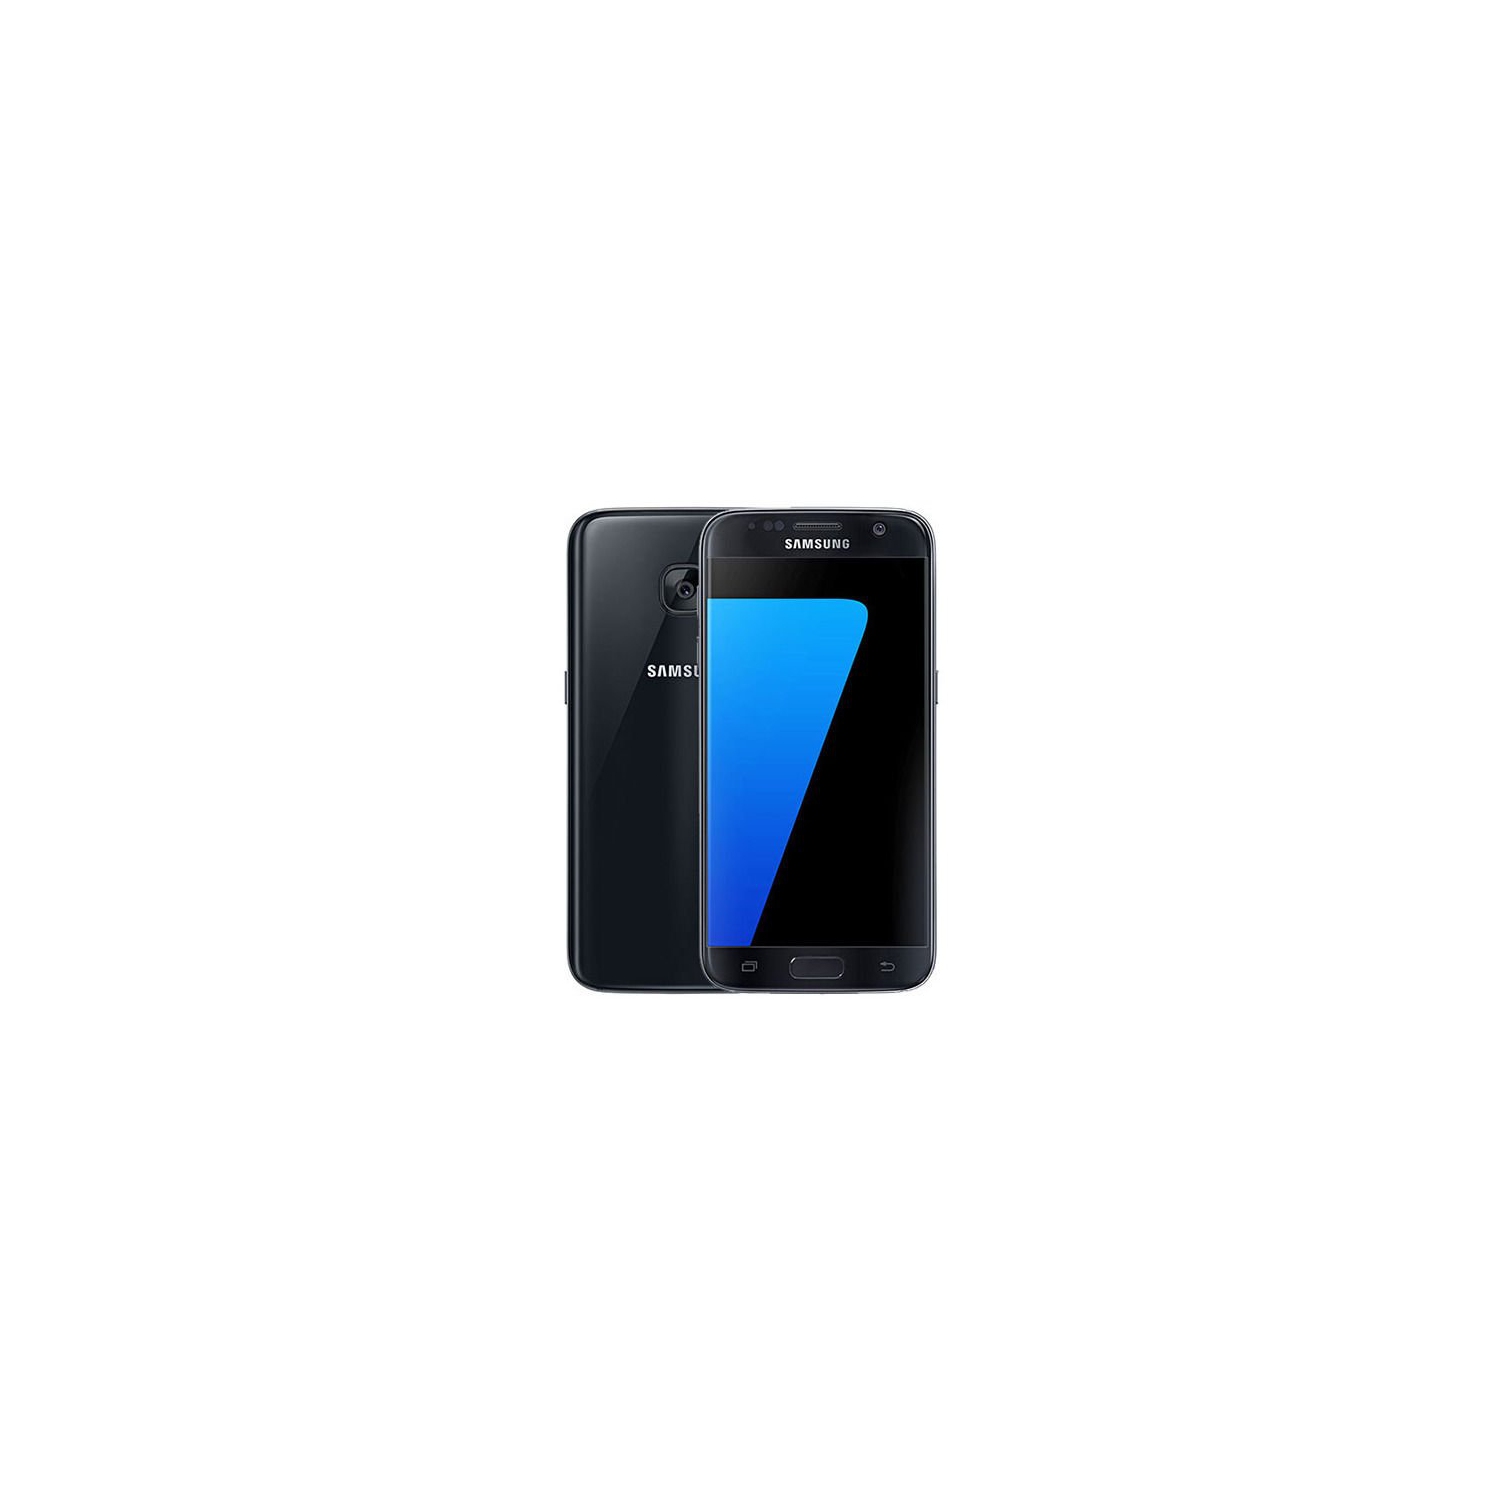 Refurbished (Good) - Samsung Galaxy S7 32GB Smartphone - Black Onyx - Unlocked